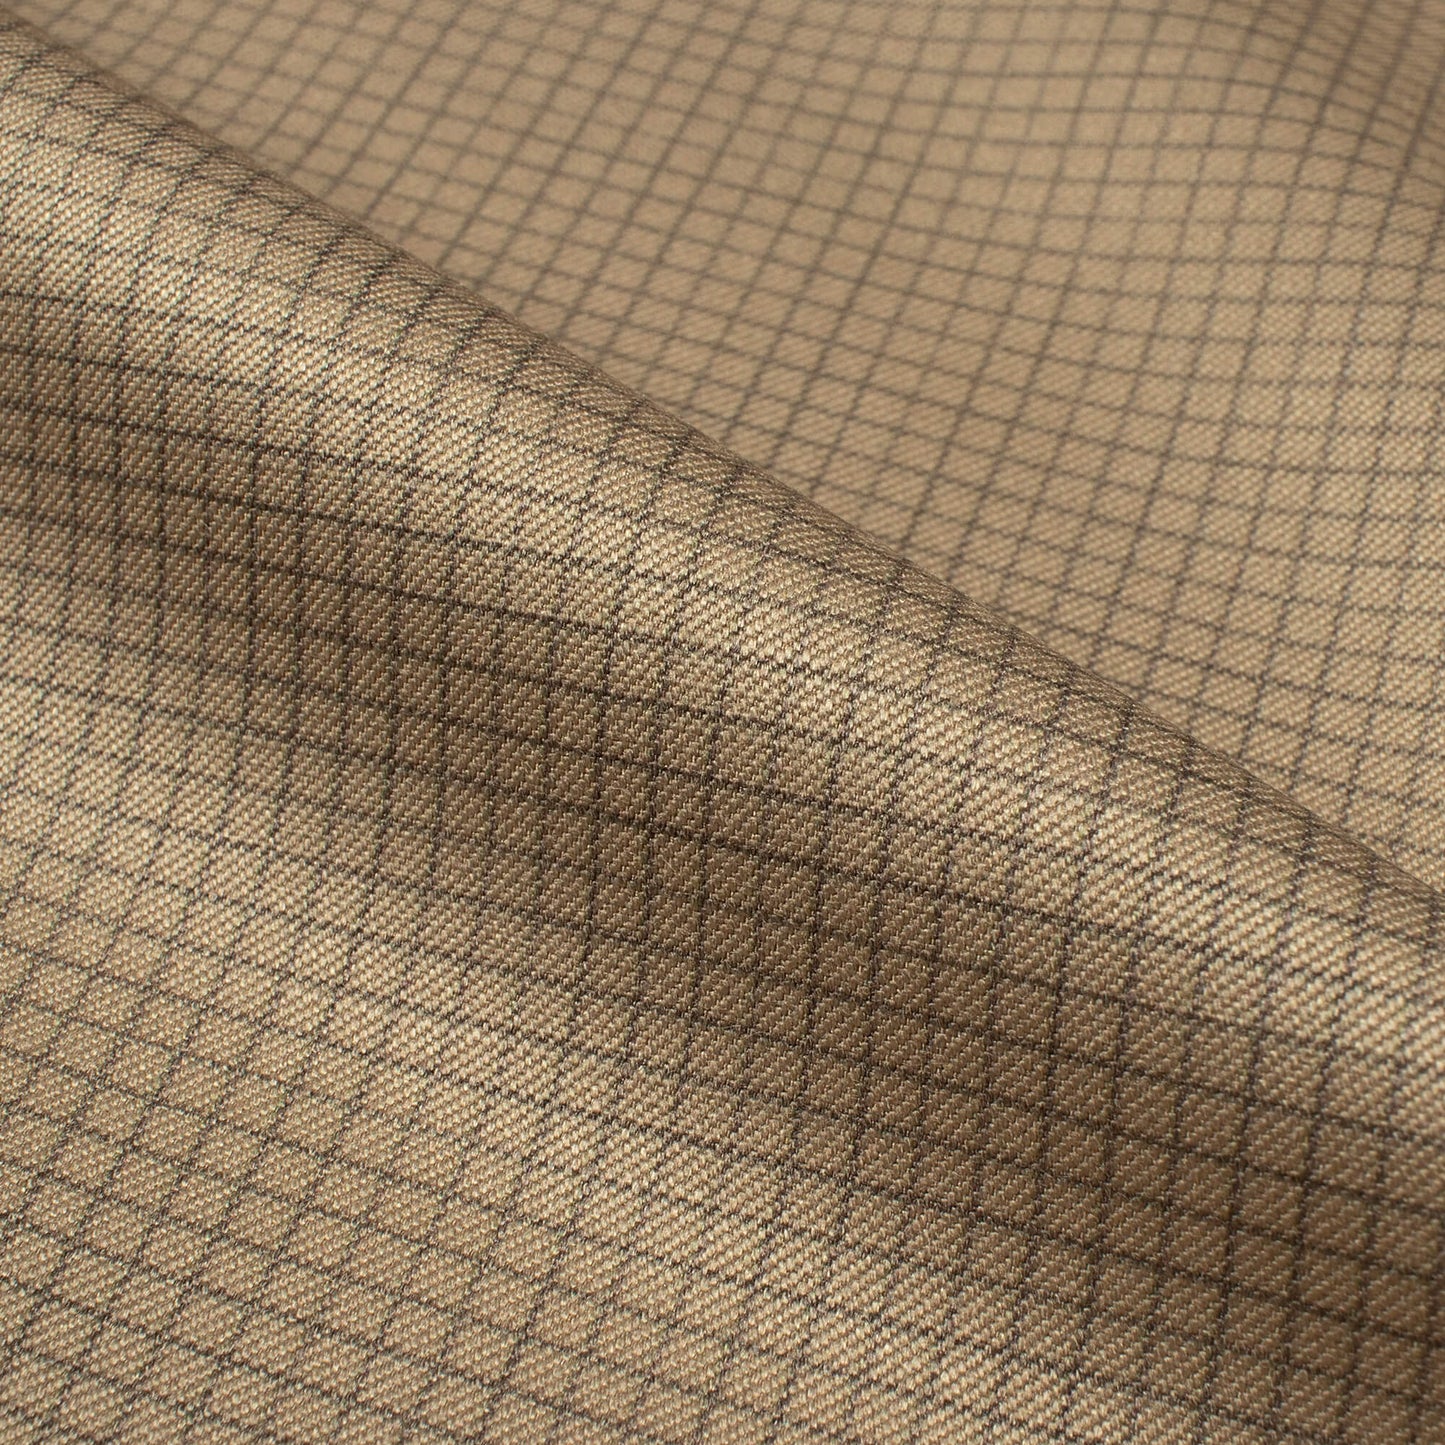 Tan Brown Checks Printed Luxury Suiting Fabric